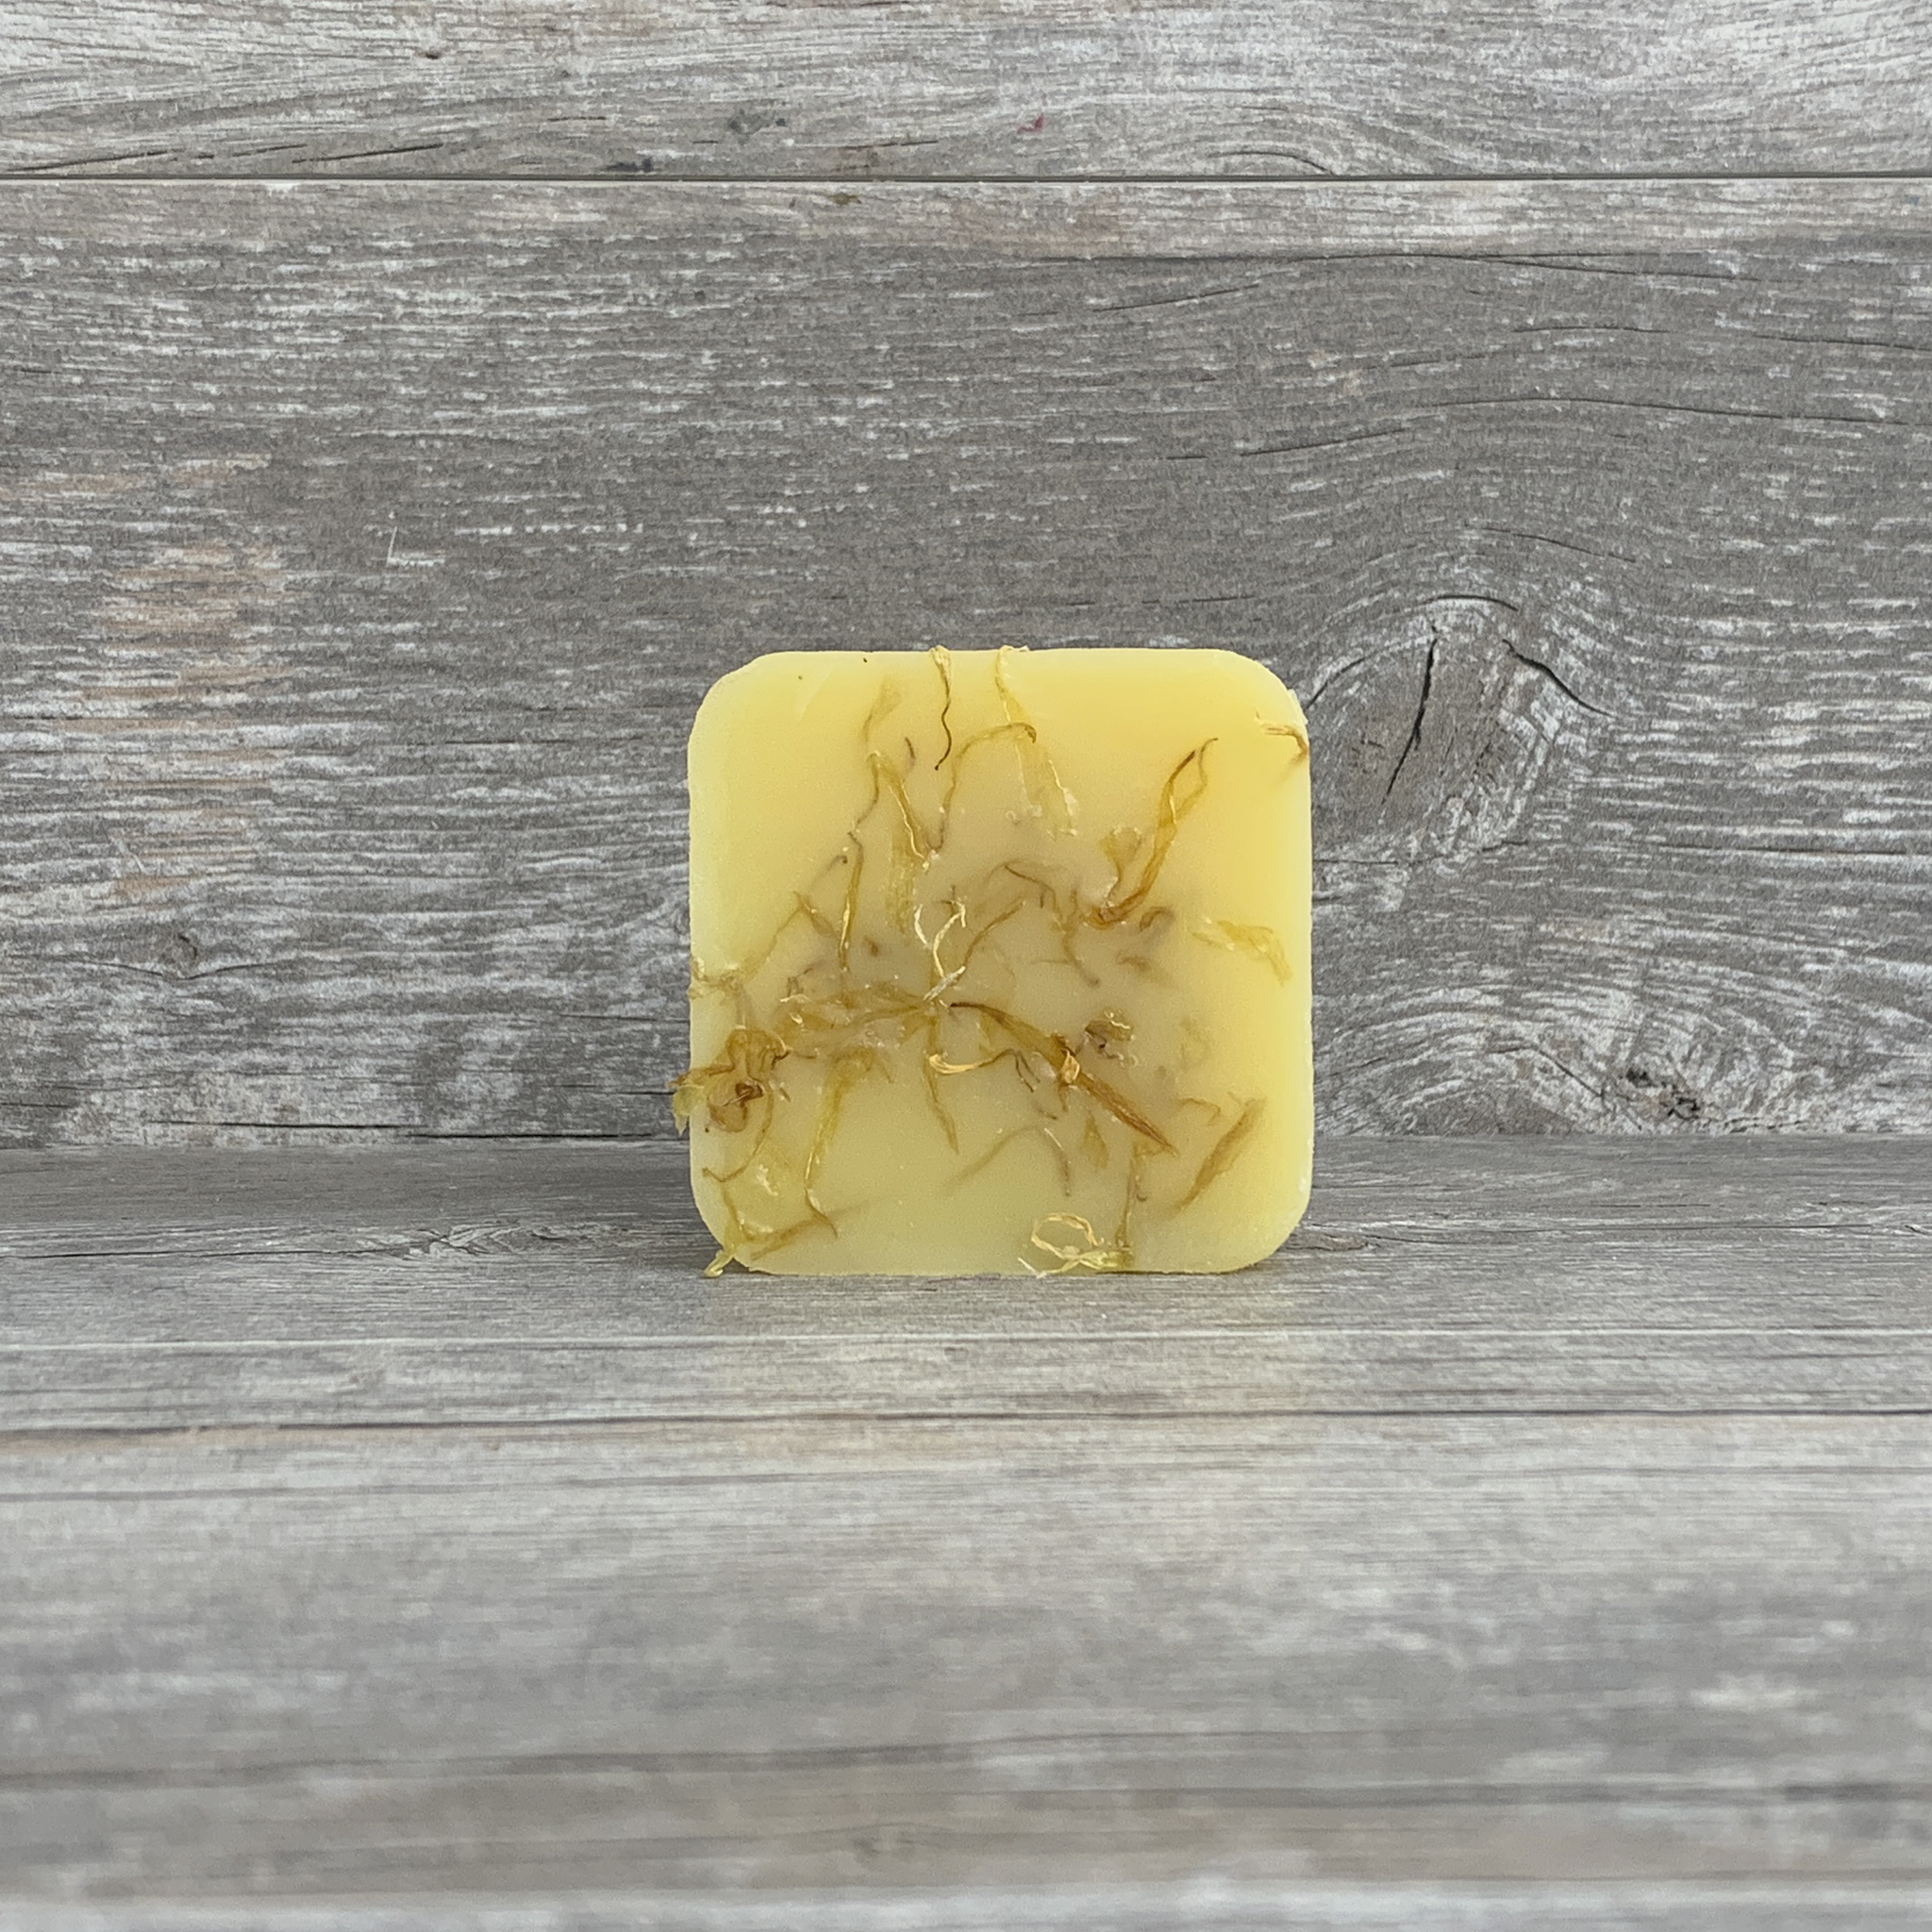 Dandelion & Calendula Artisan Soap - Limited Edition